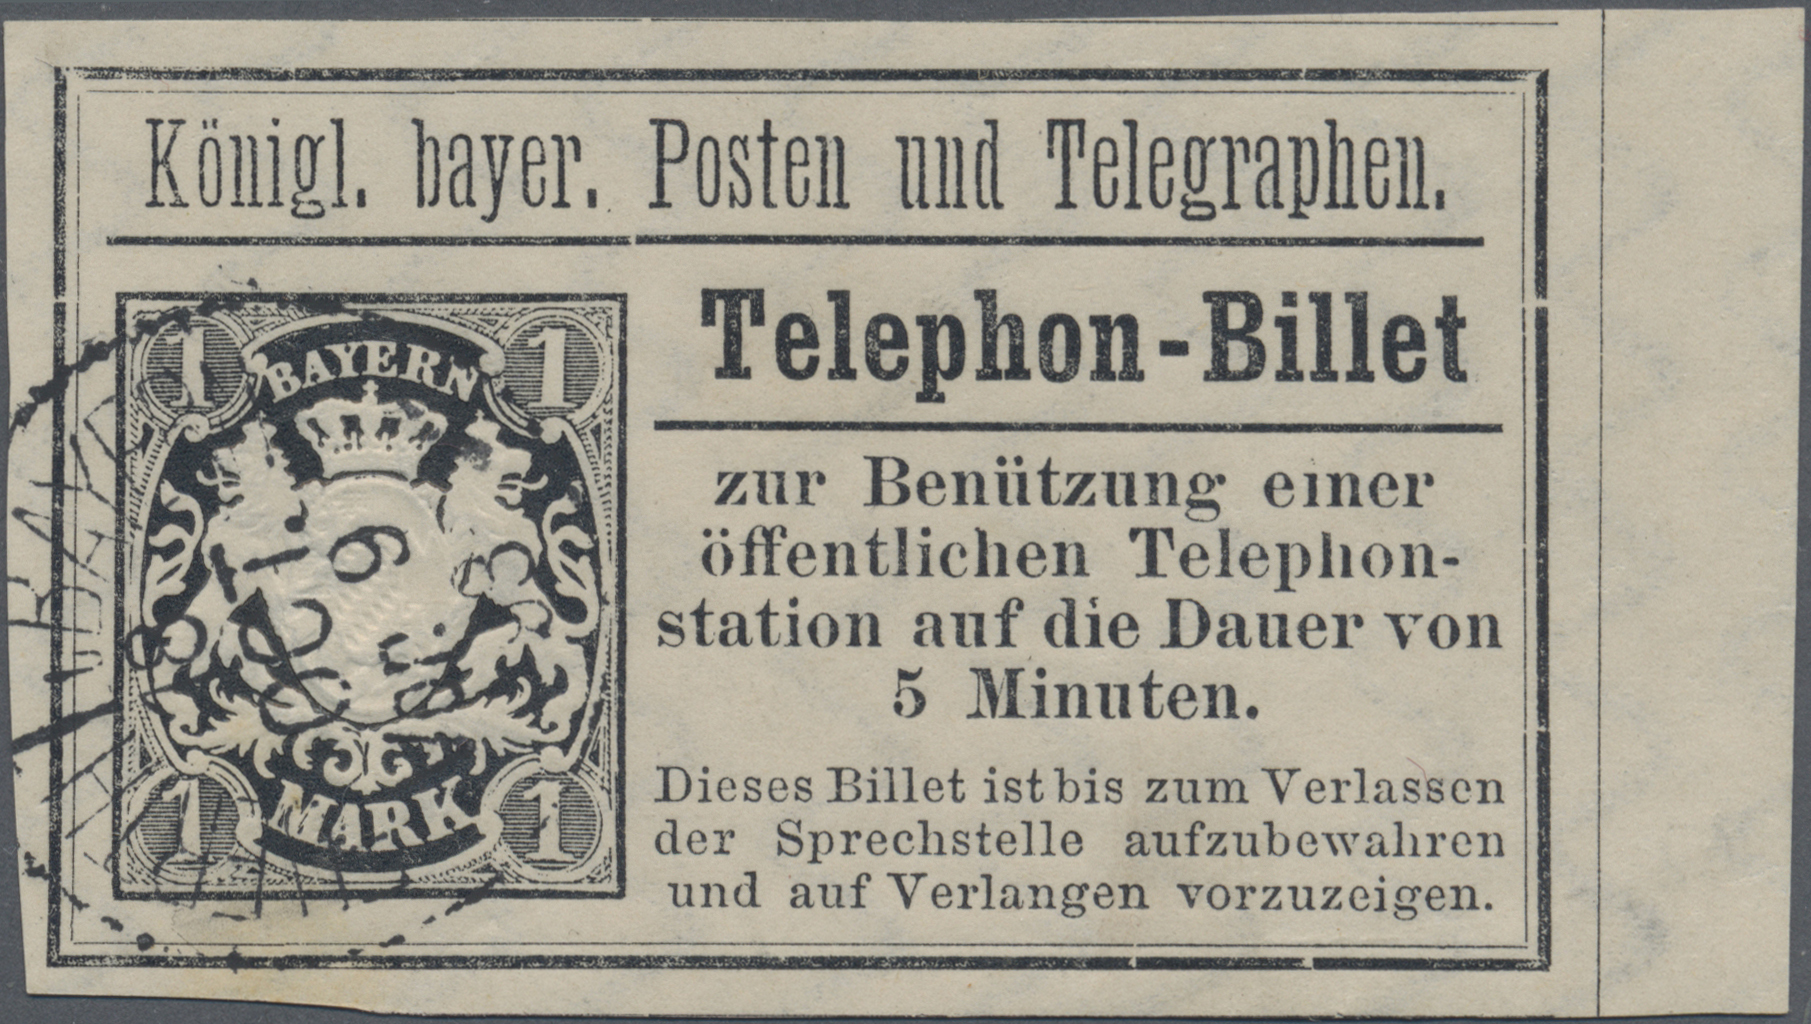 Lot 36199 - Bayern - Telefon-Billets  -  Auktionshaus Christoph Gärtner GmbH & Co. KG Sale #44 Collections Germany